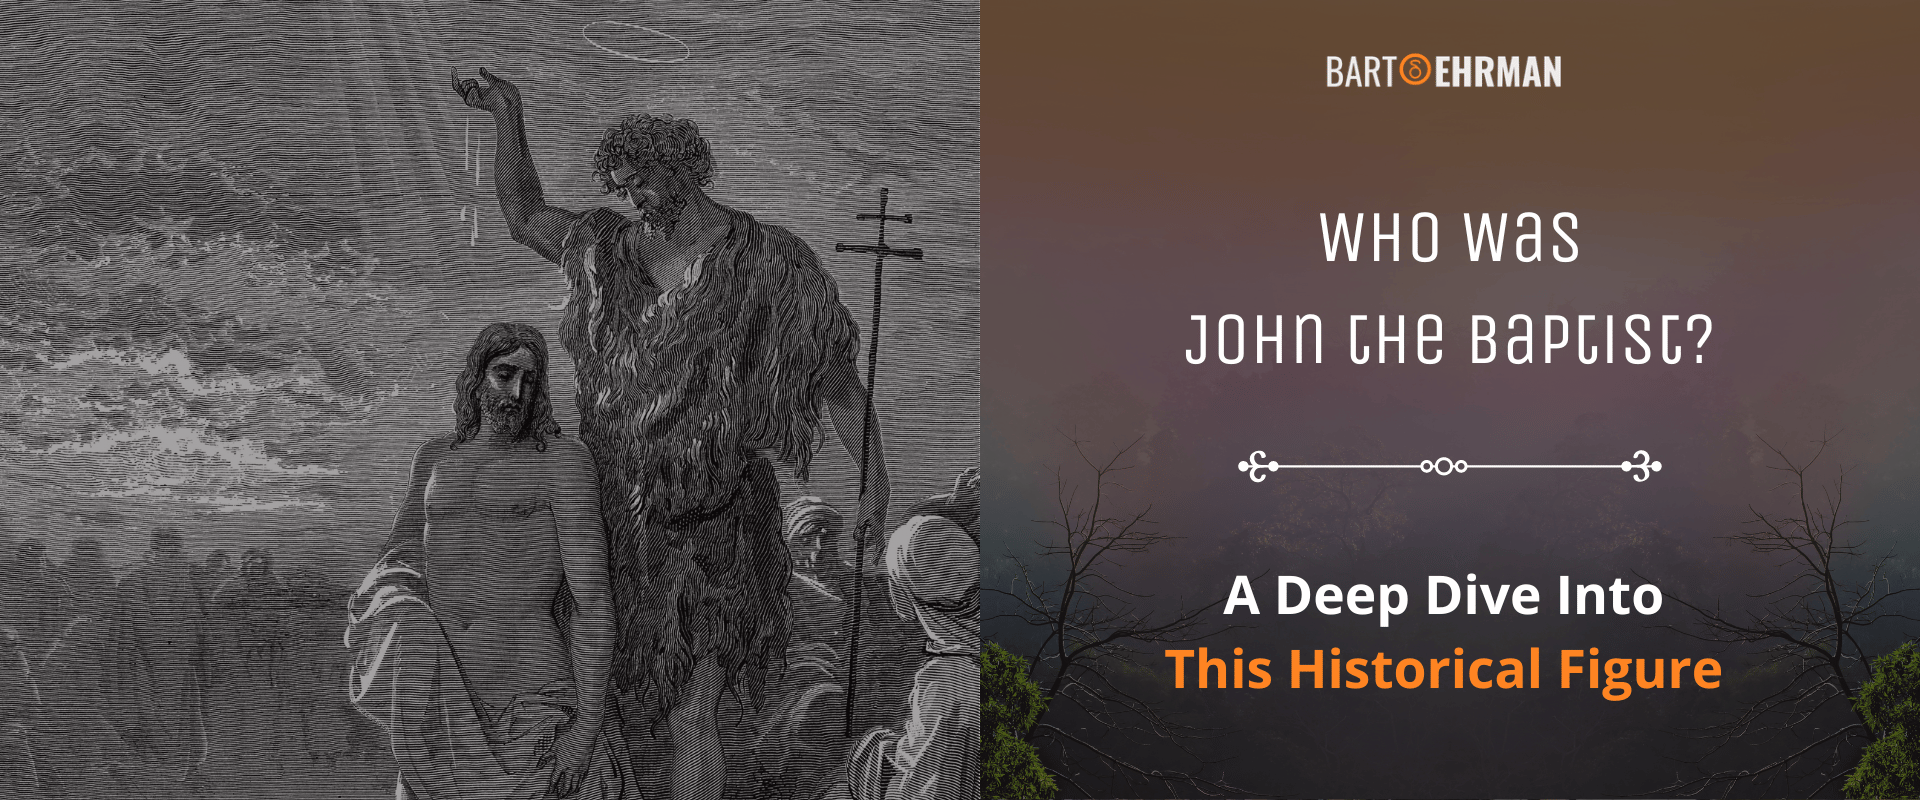 Who Was John the Baptist Bart Ehrman